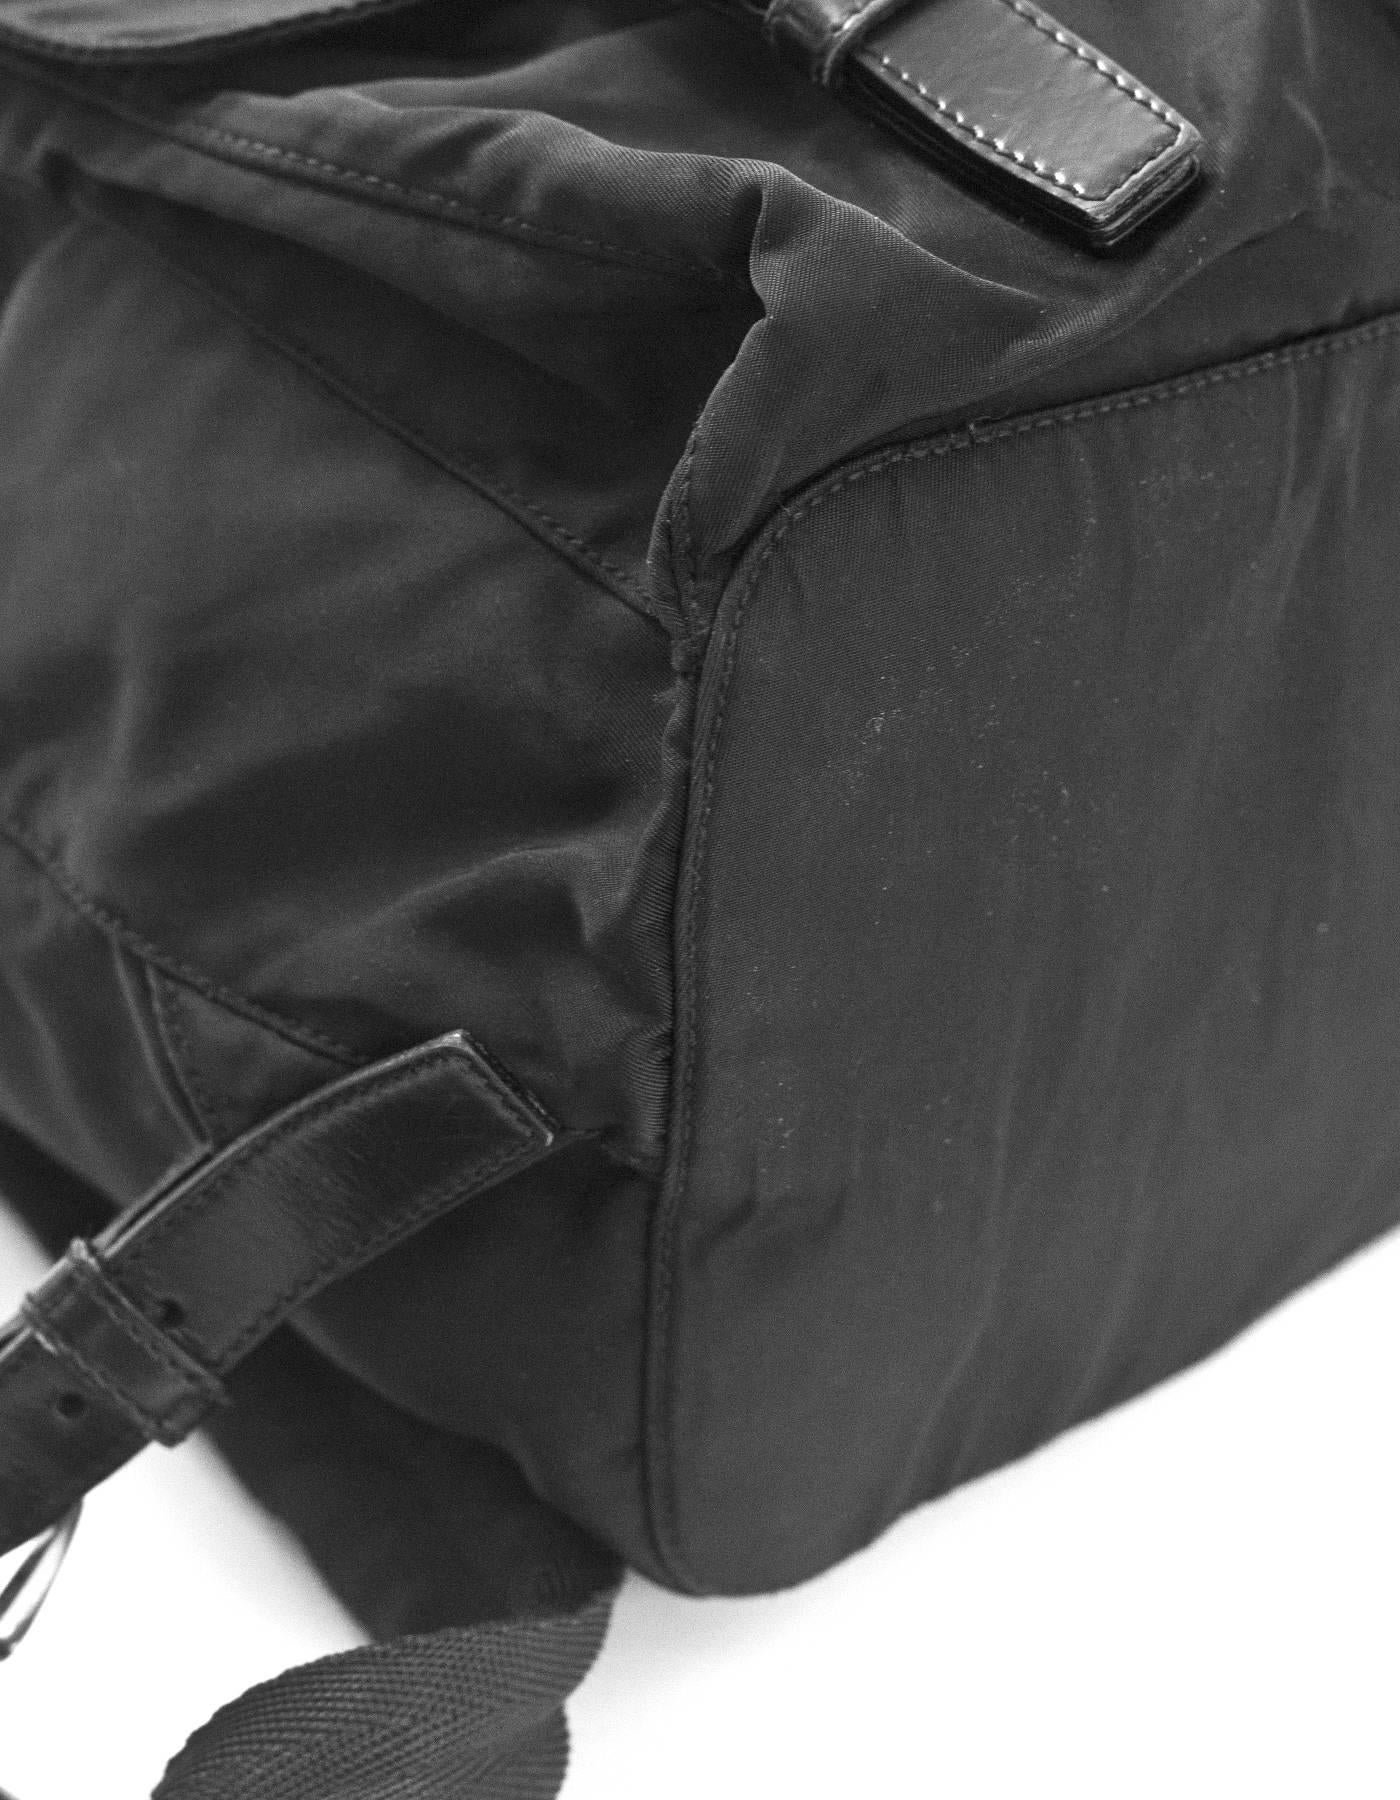 Prada Black Tessuto Nylon & Leather Trim Backpack Bag w/ Front Pockets 1